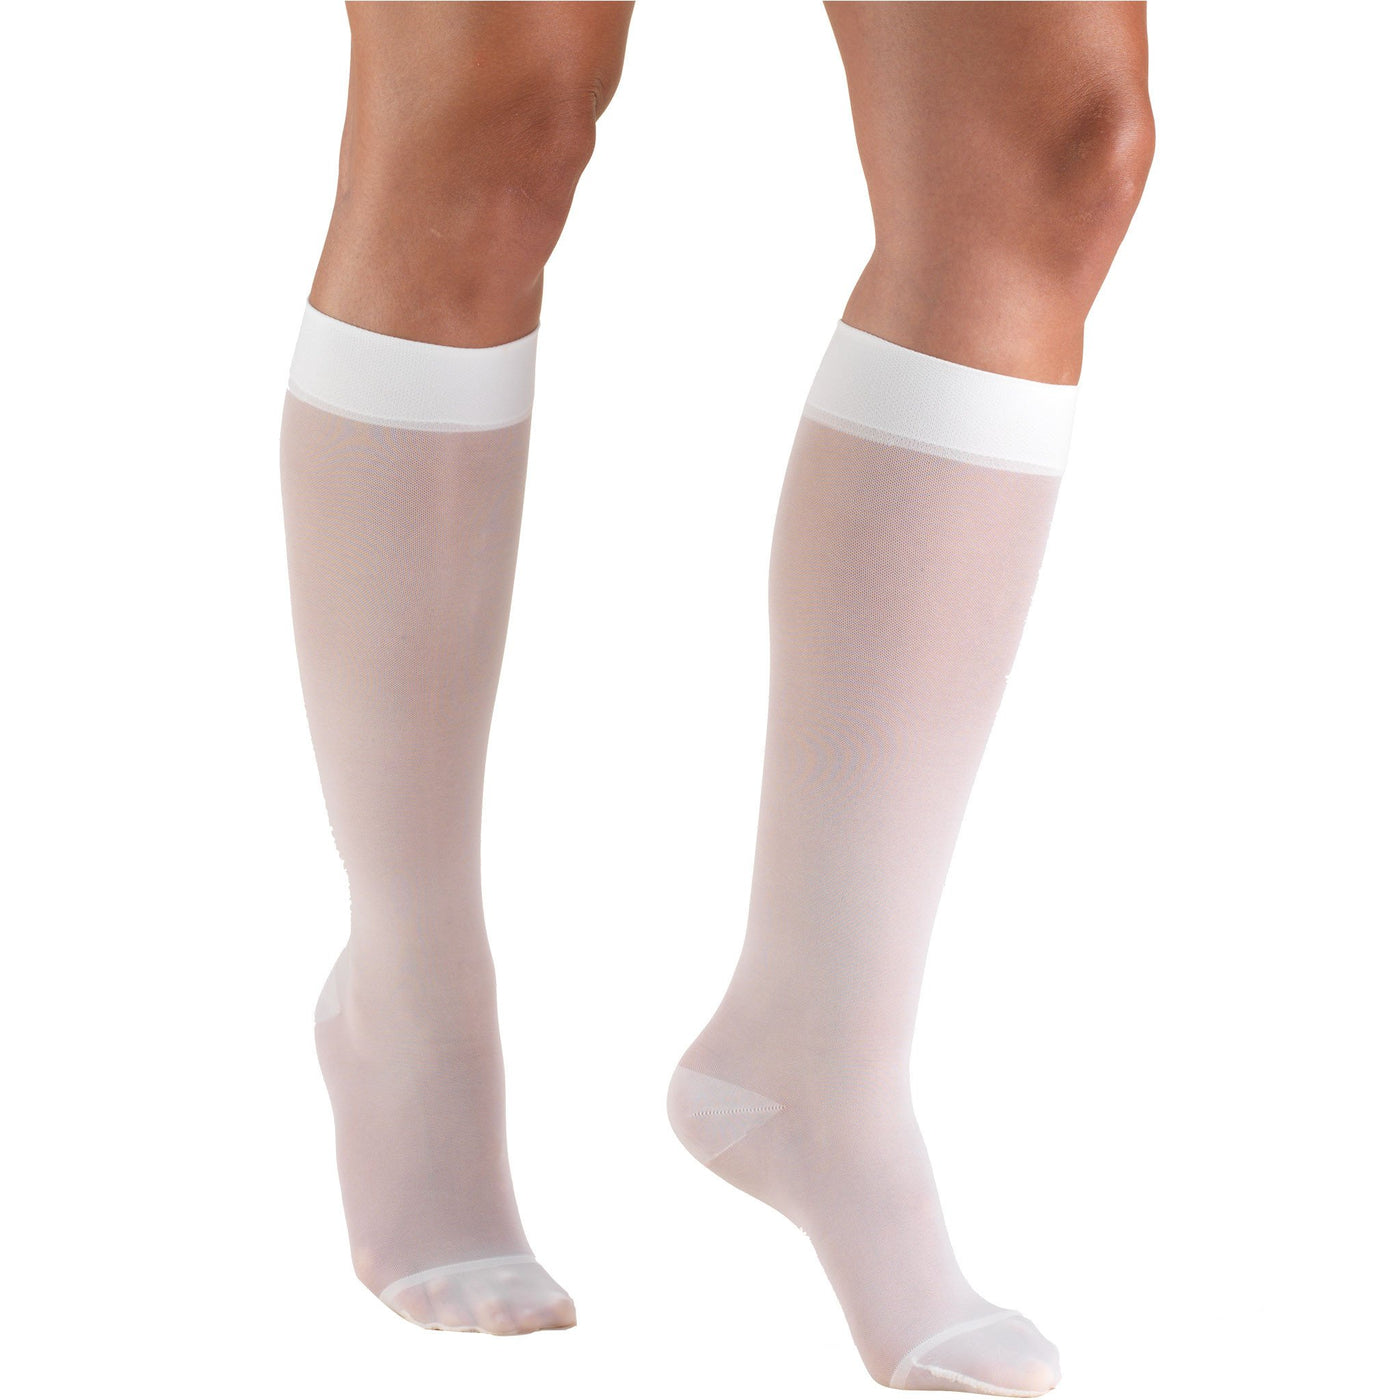 TRUFORM Unisex Anti-Embolism Stockings - 18 mmHg - Knee High - Open Toe